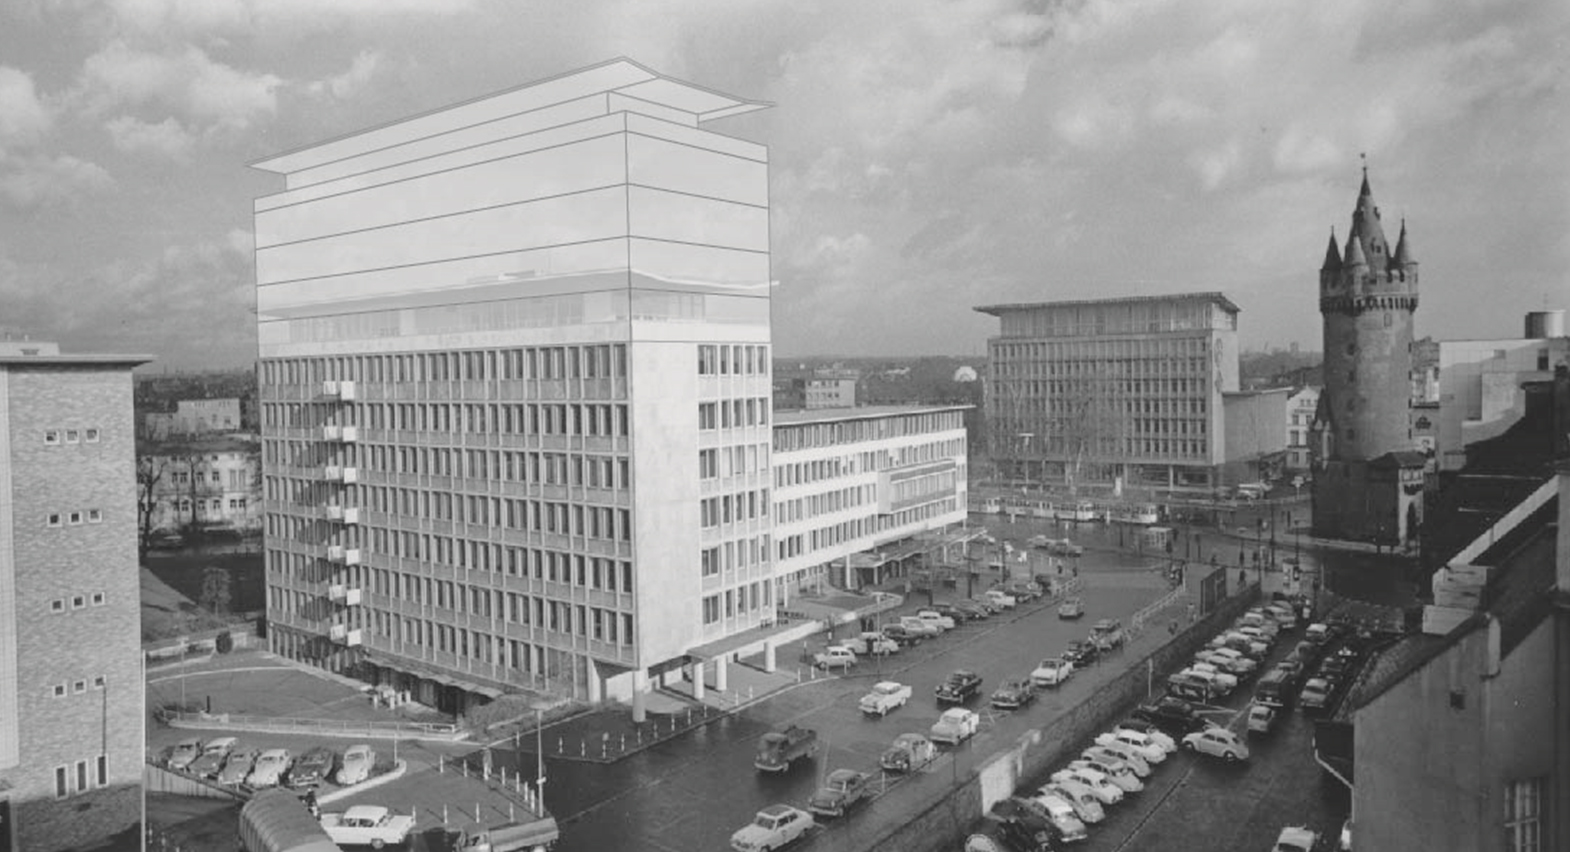 Landwirtschaftliche Rentenbank: Existing building retrofit with additional new building floors.